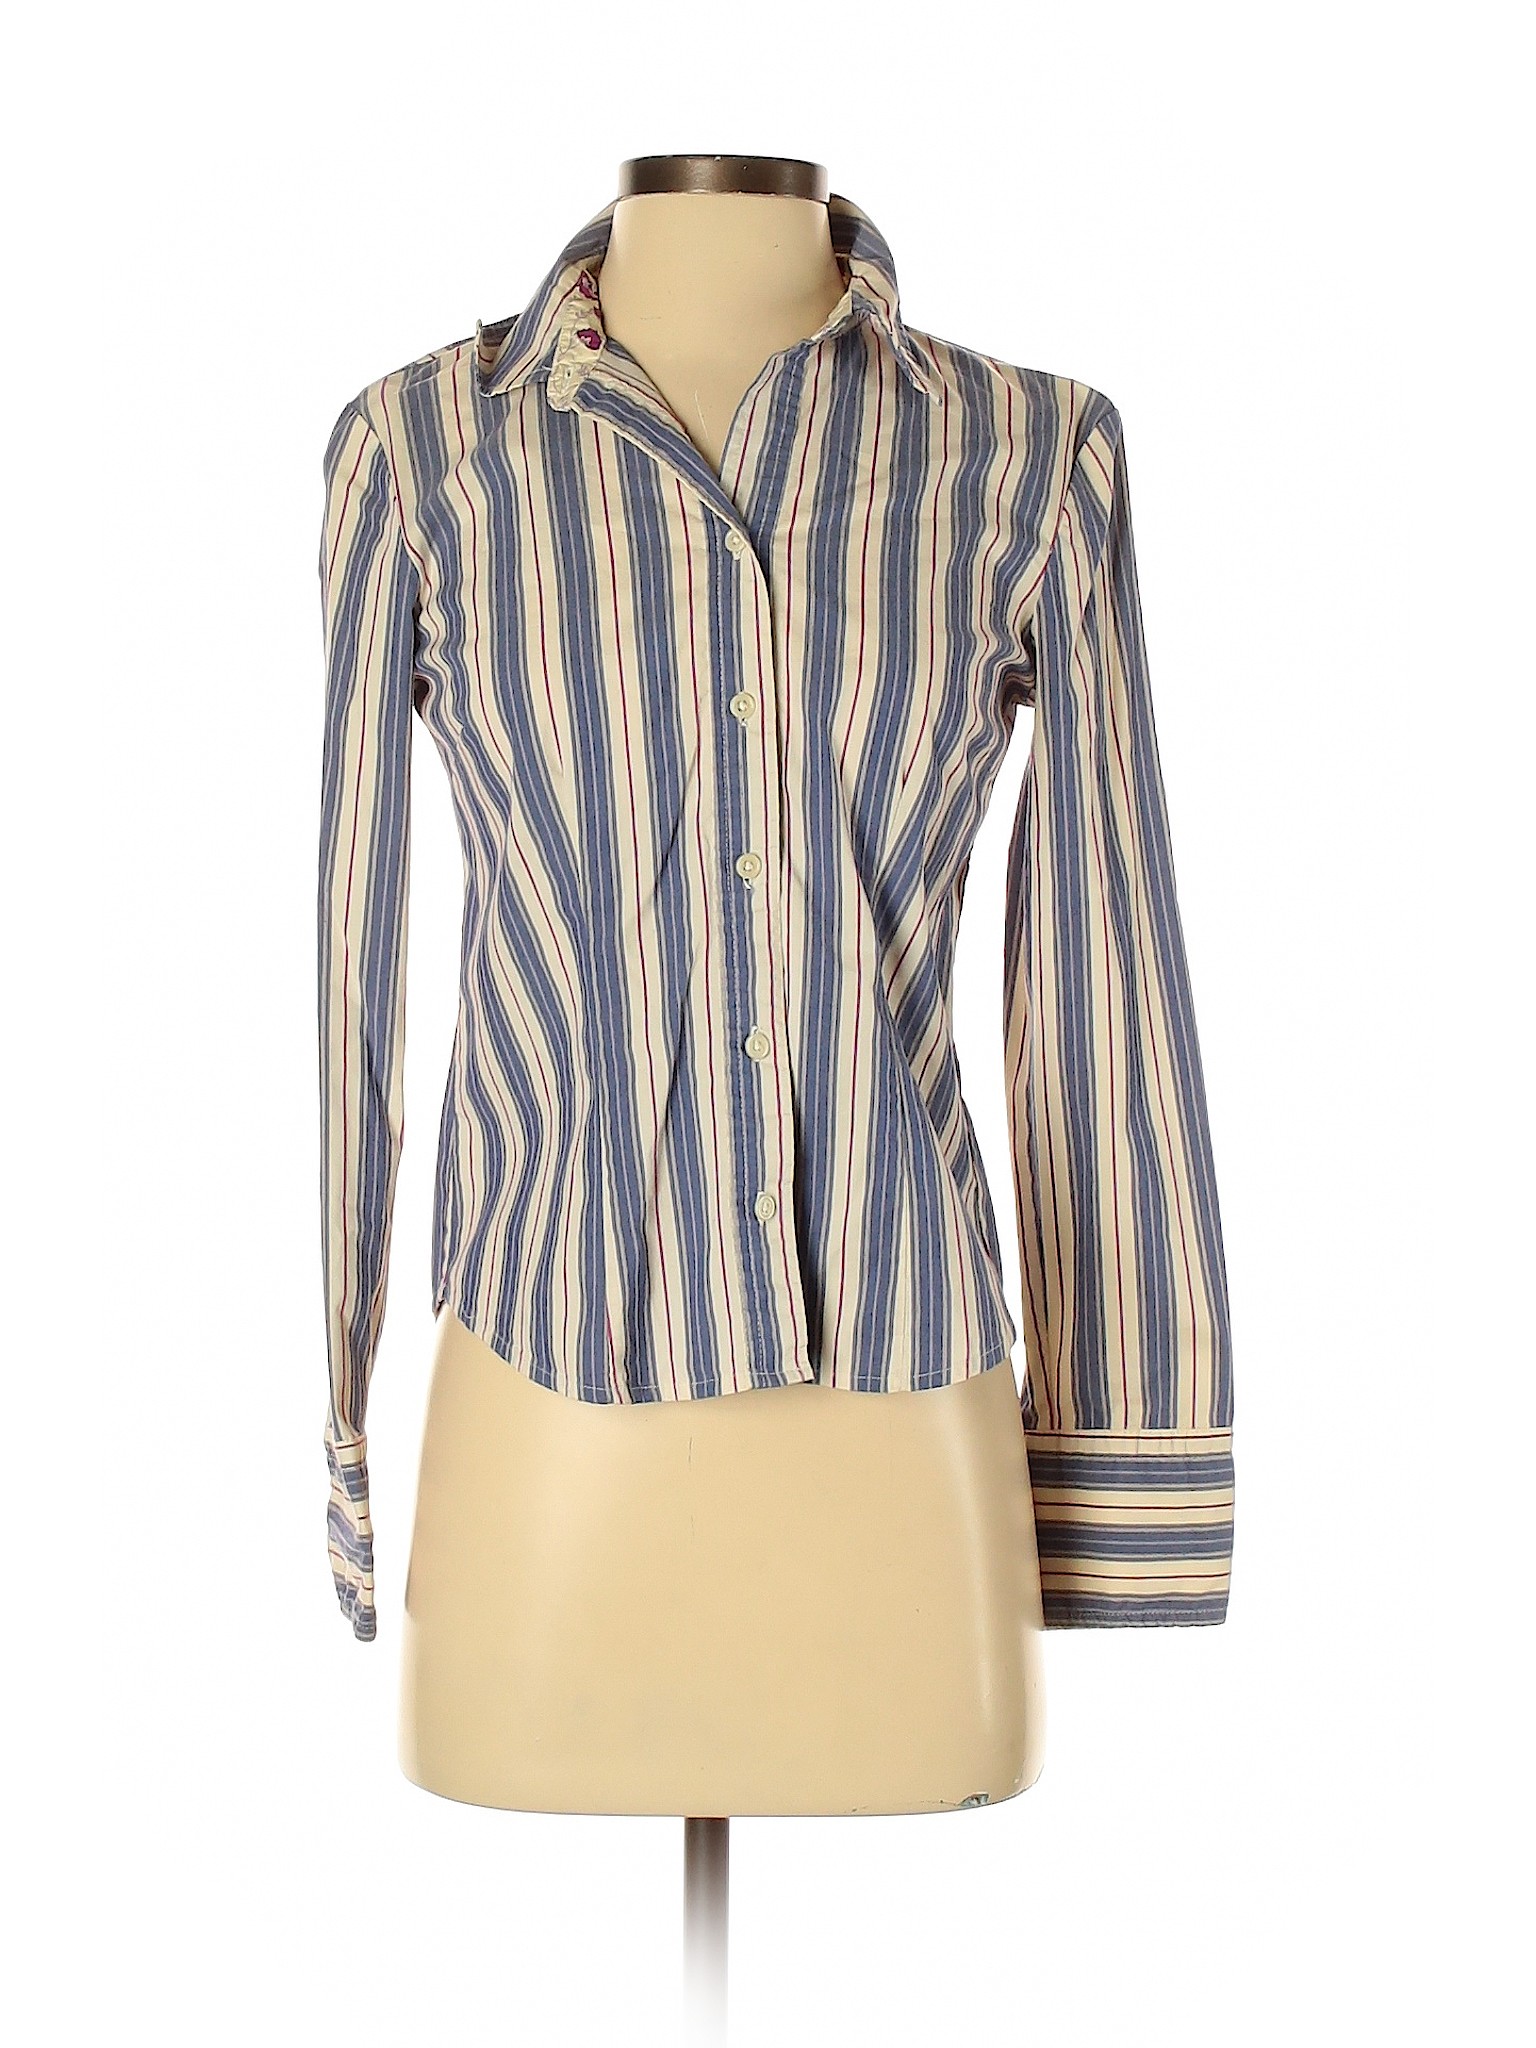 Old Navy Women Blue Long Sleeve Button-Down Shirt S | eBay